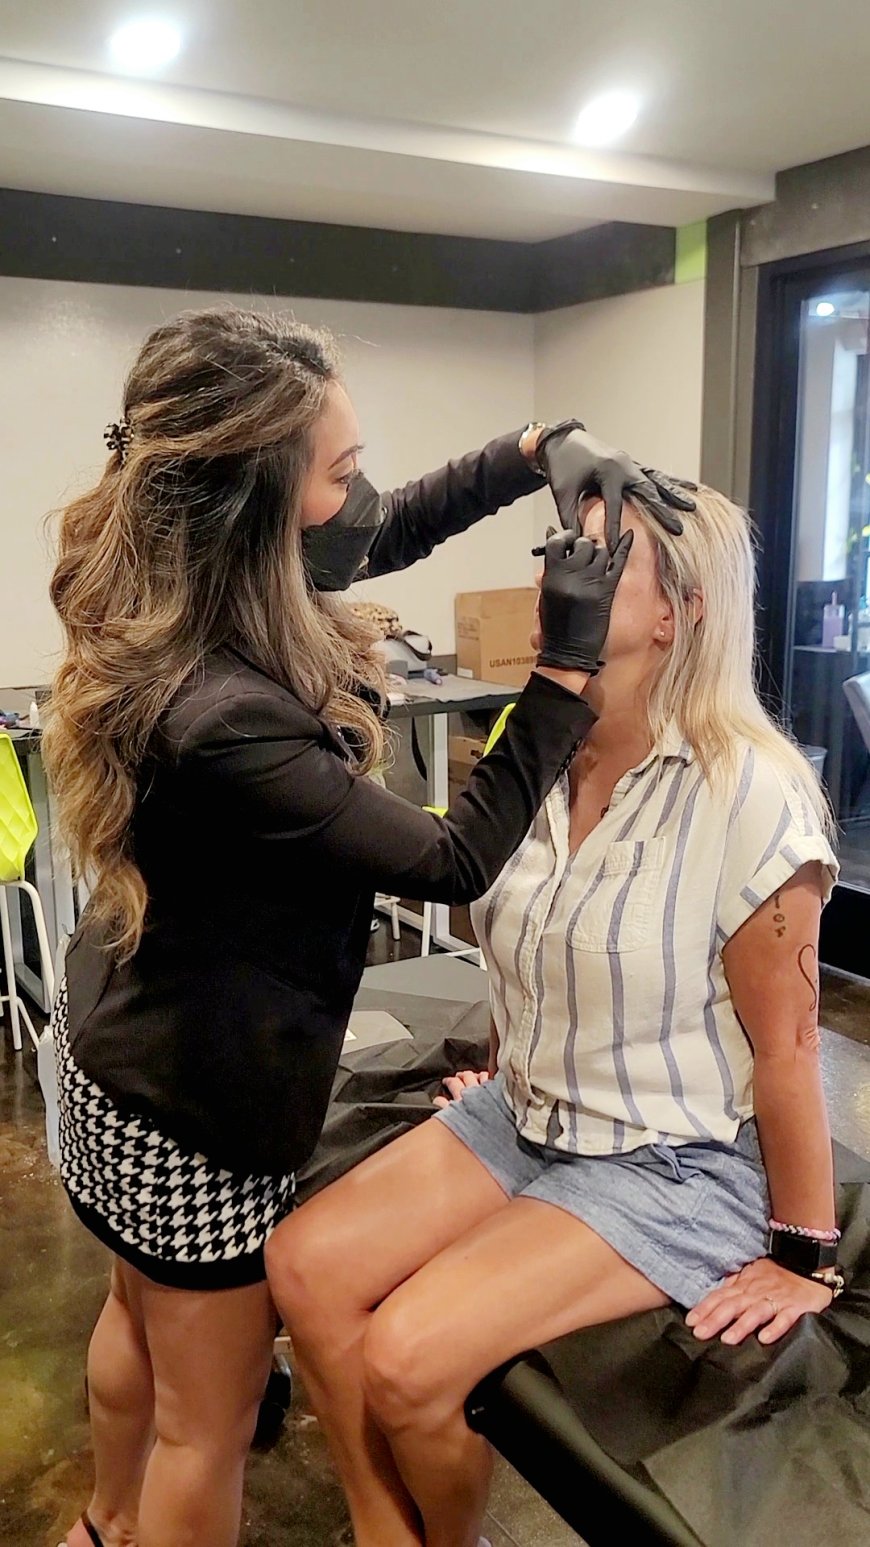 San Diego's Top Permanent Makeup Training Academies